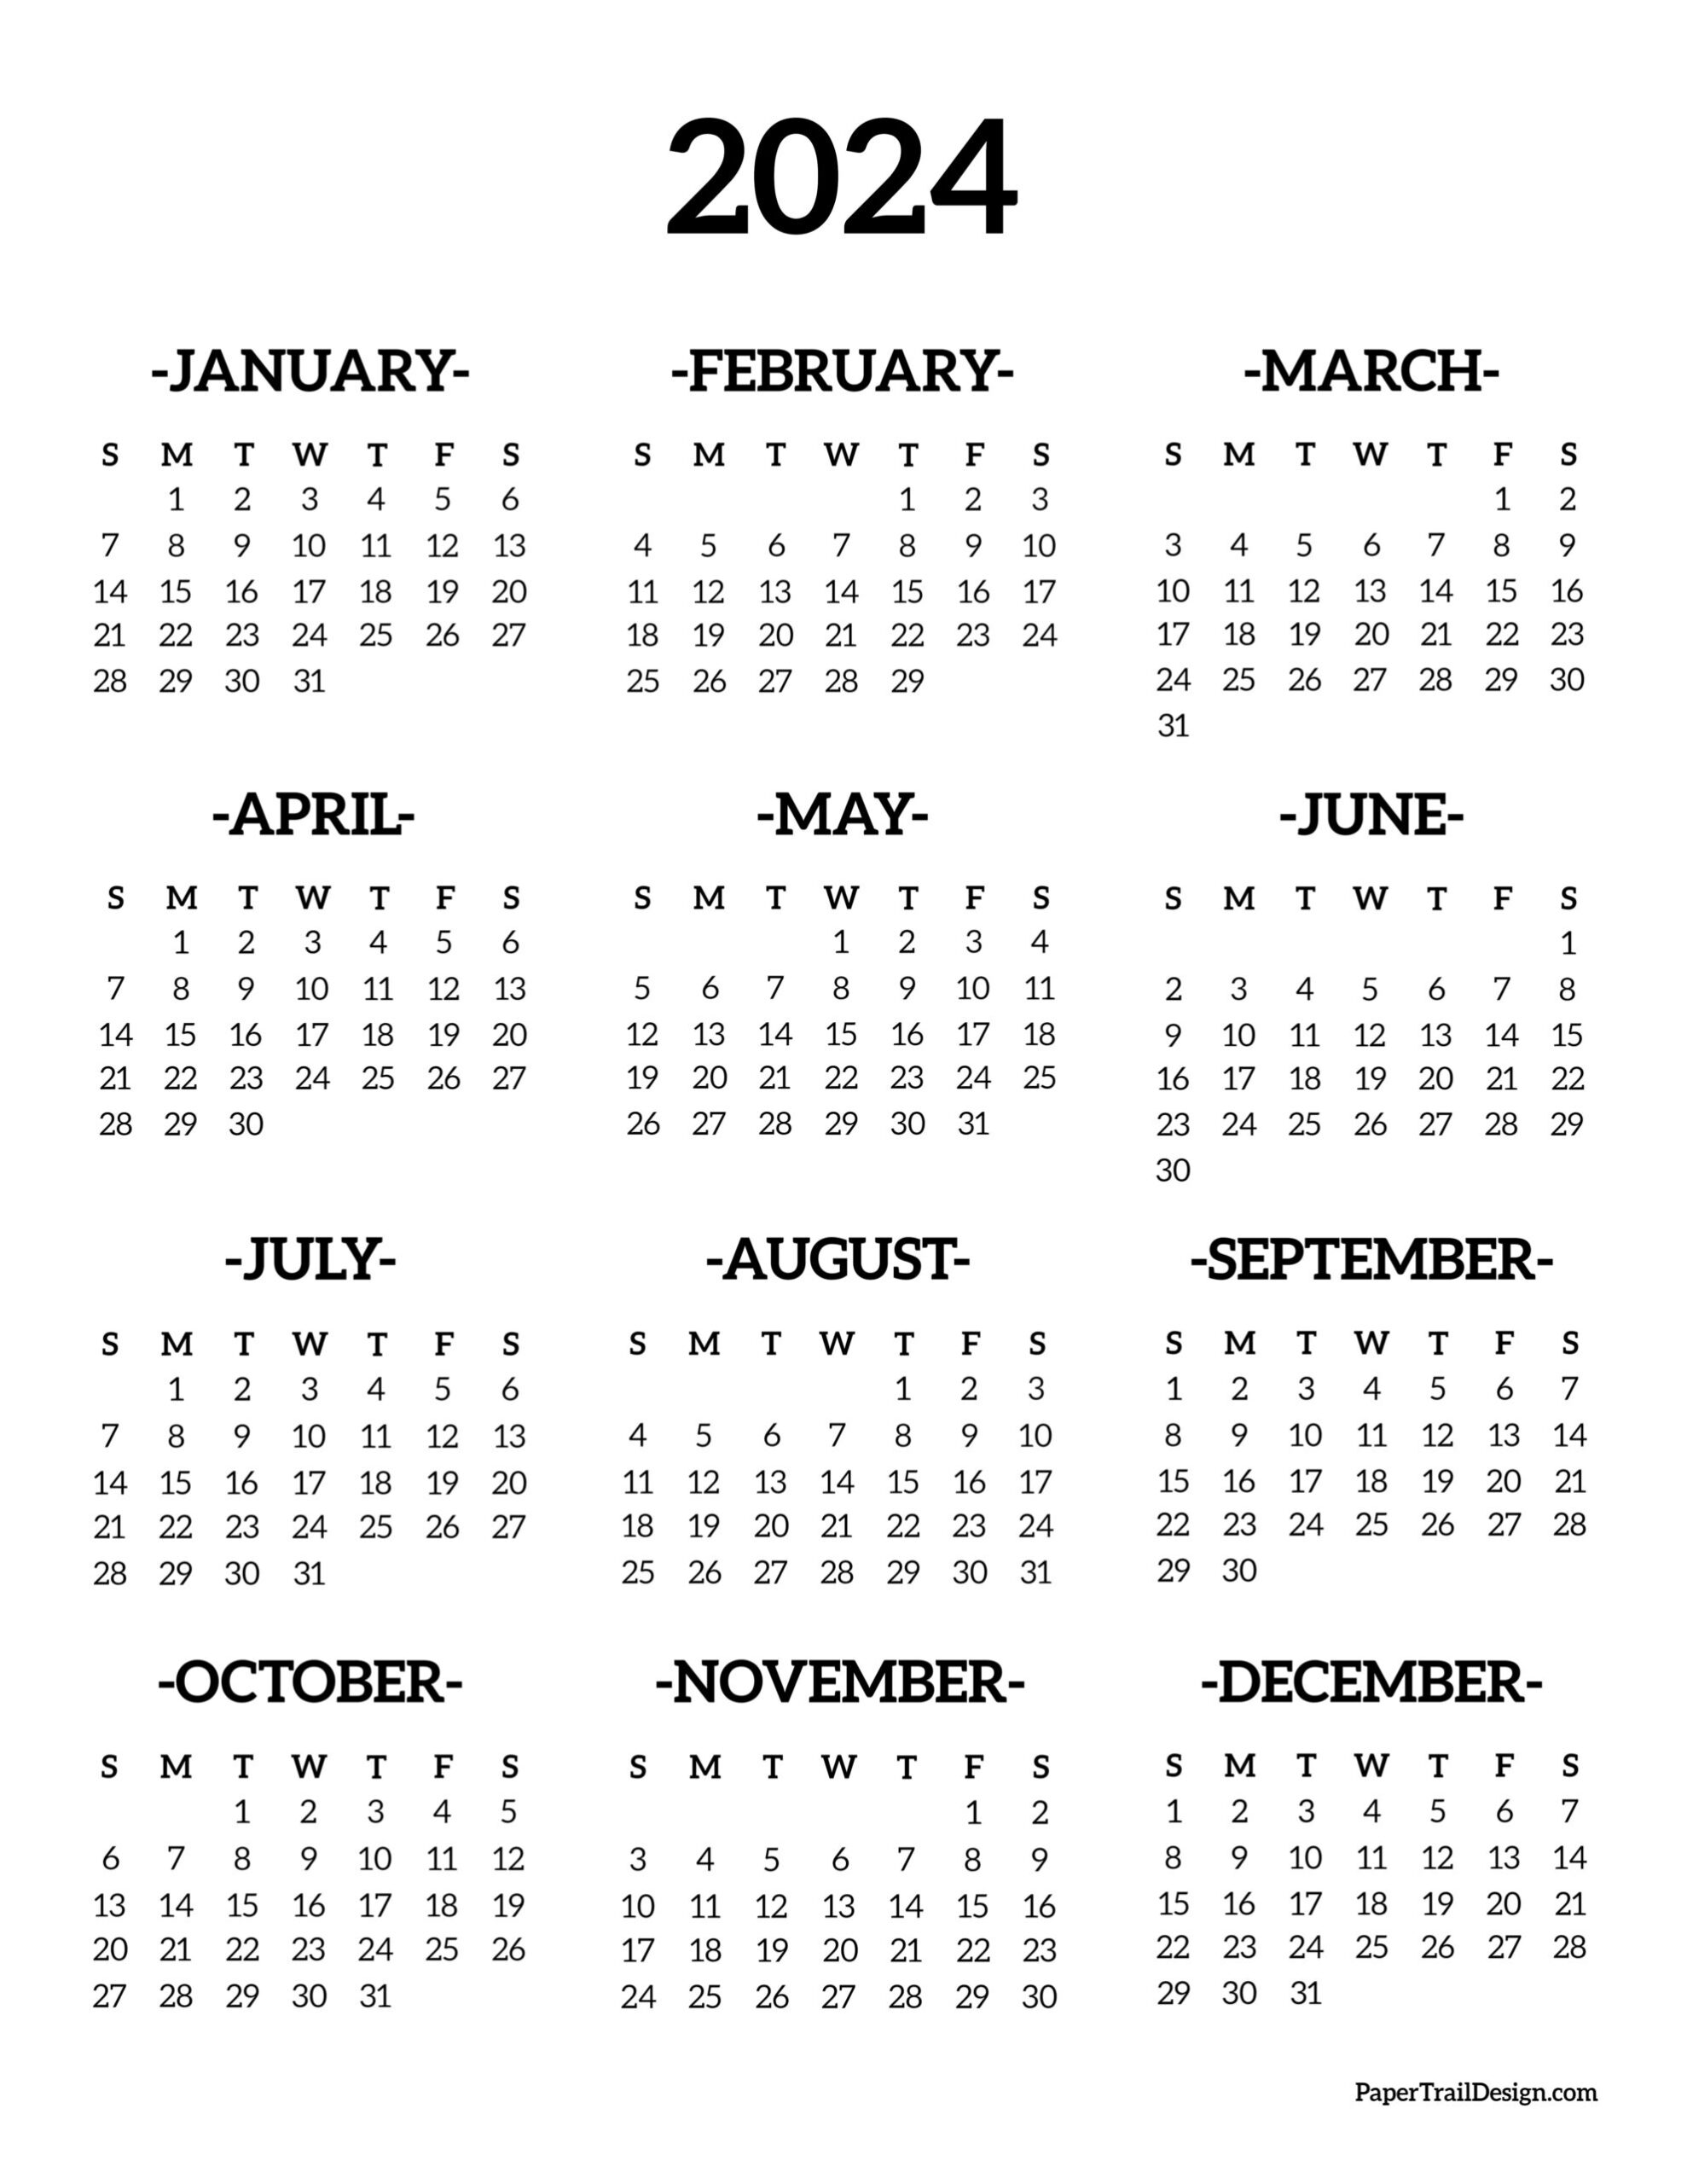 Calendar 2024 Printable One Page - Paper Trail Design | Print Calendar 2024